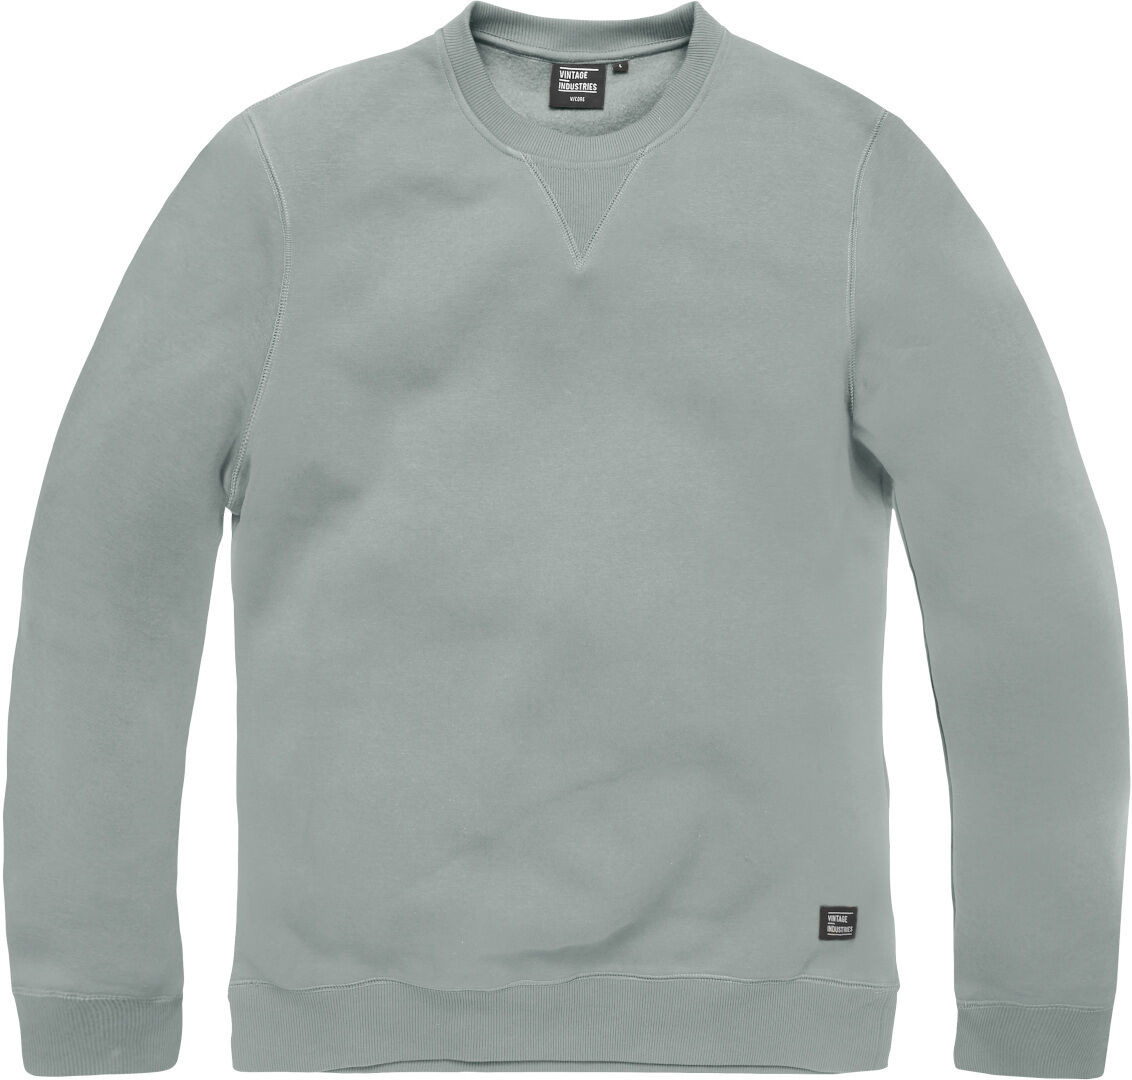 Vintage Industries Greeley Crewneck Sweatshirt XL Grau